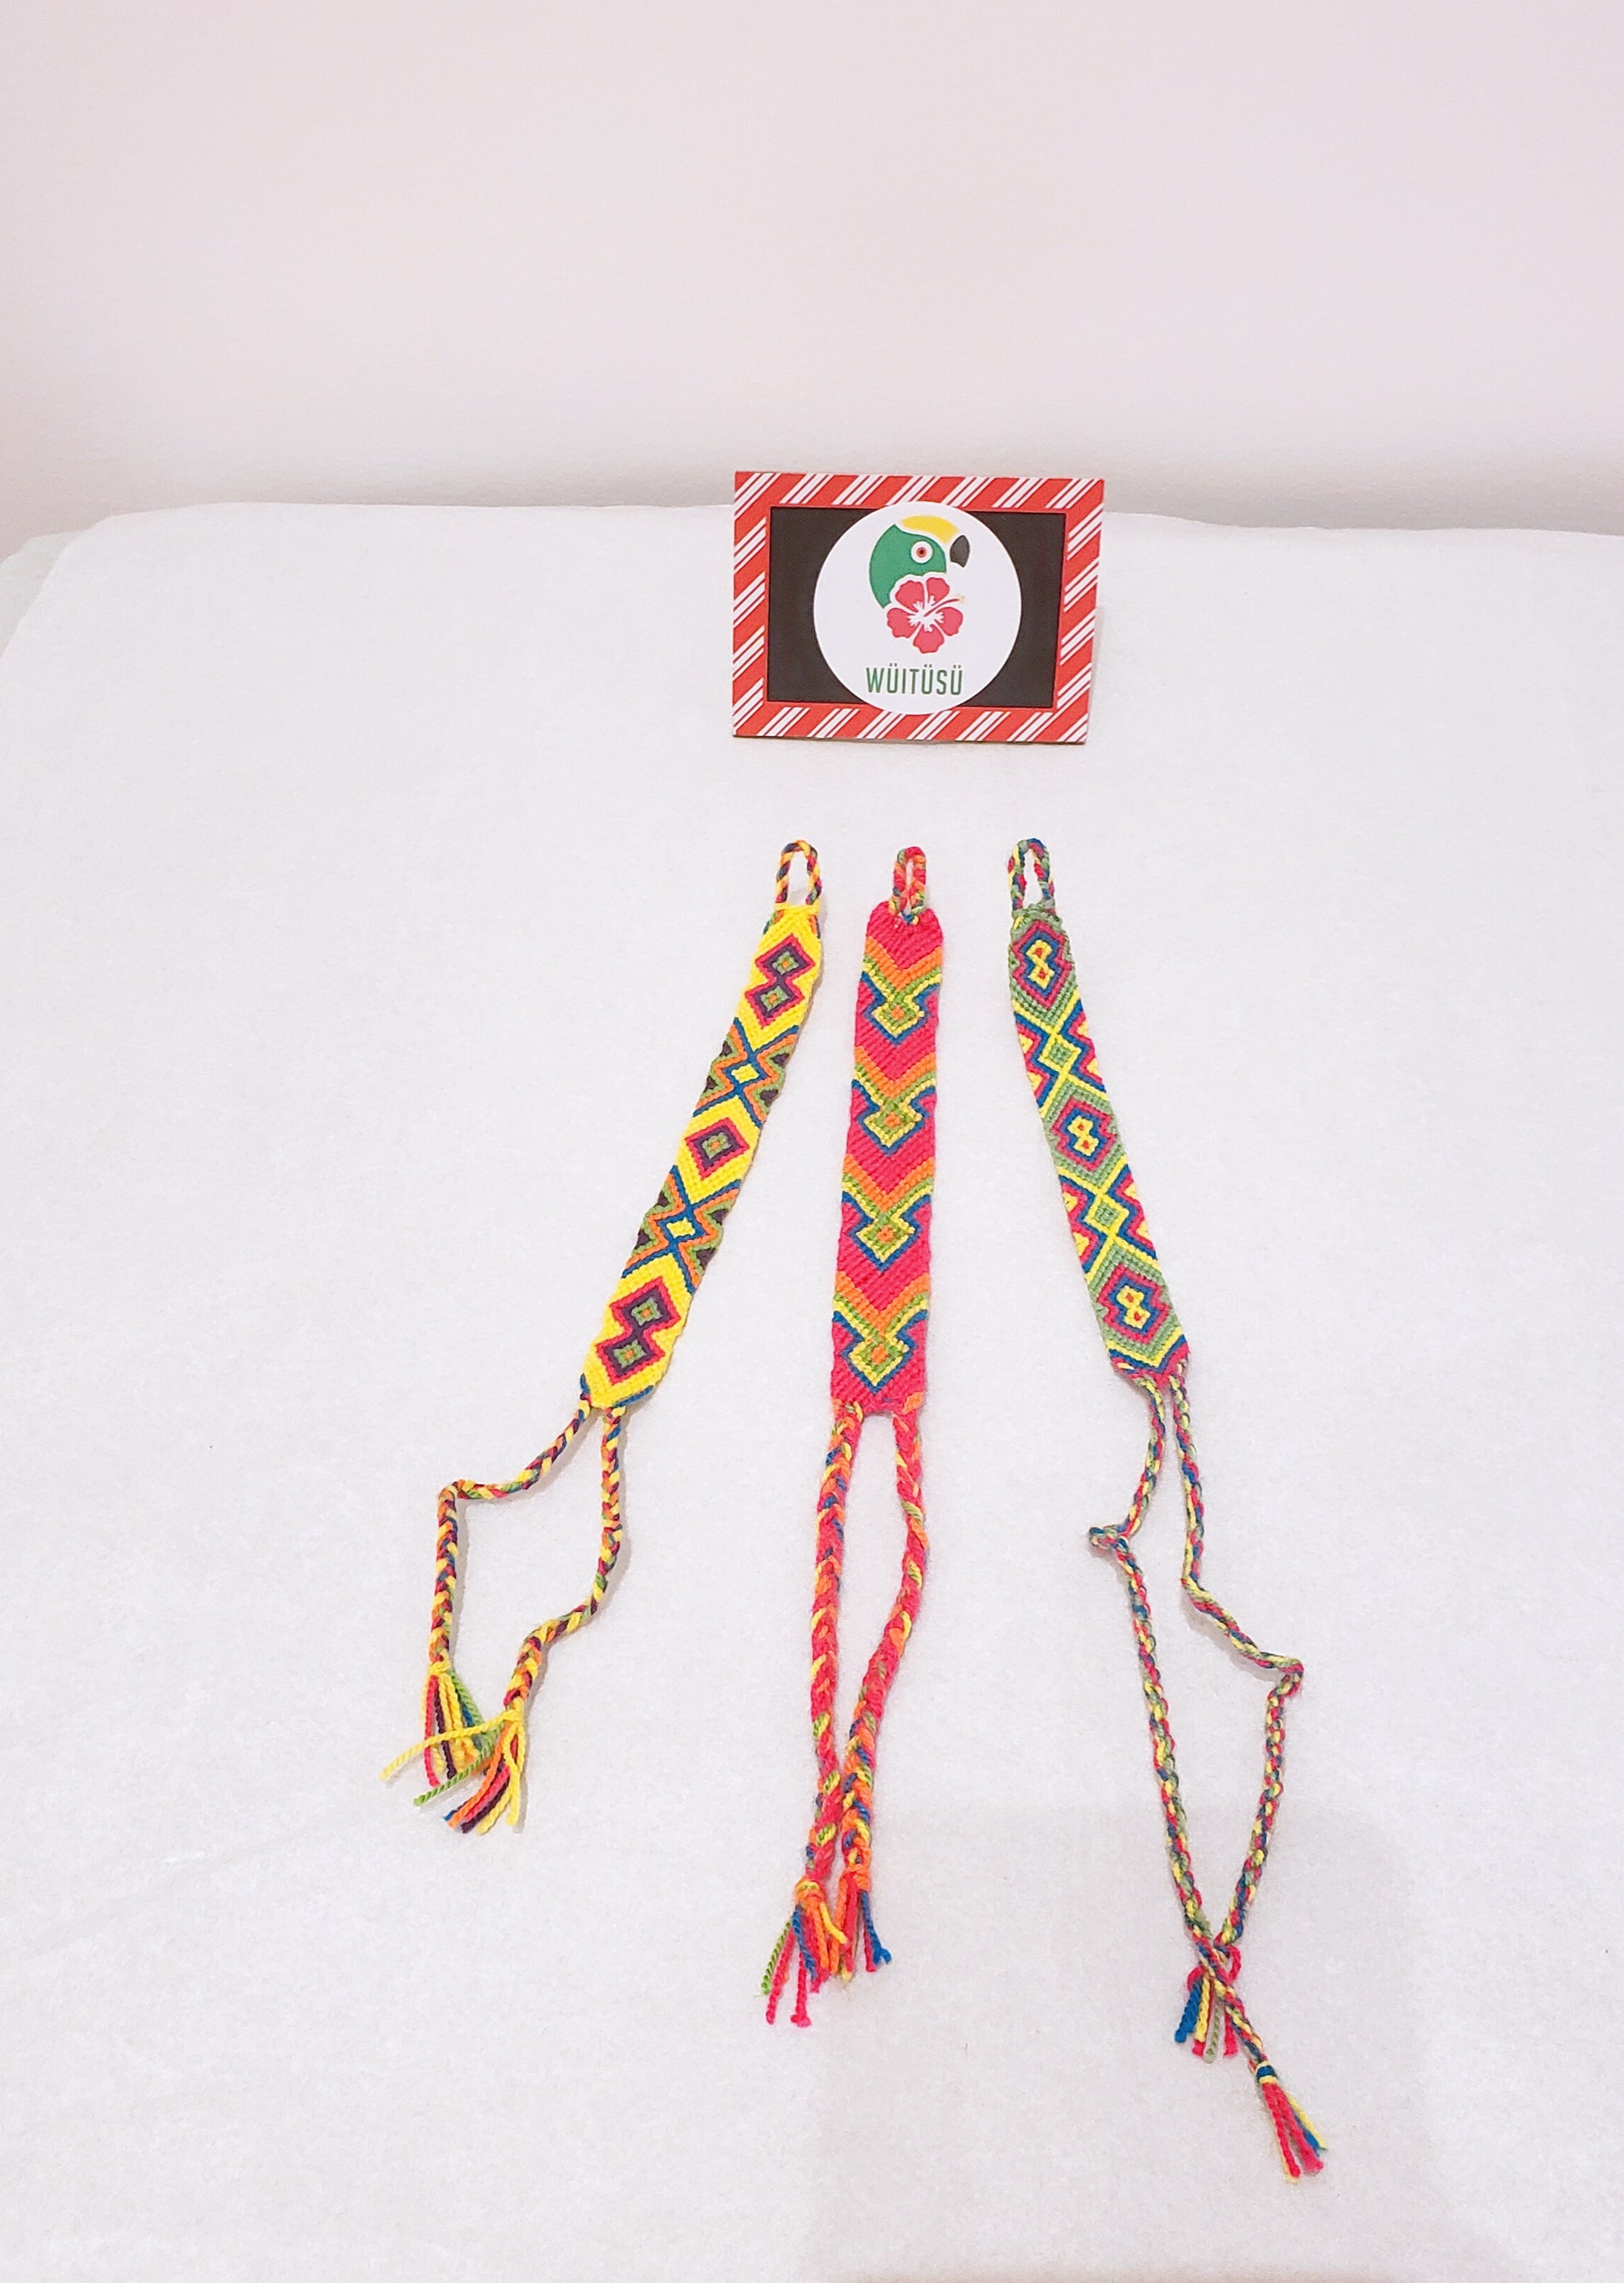 2 Pack of Three Neon Wayuu Handmade Bracelets - Wuitusu